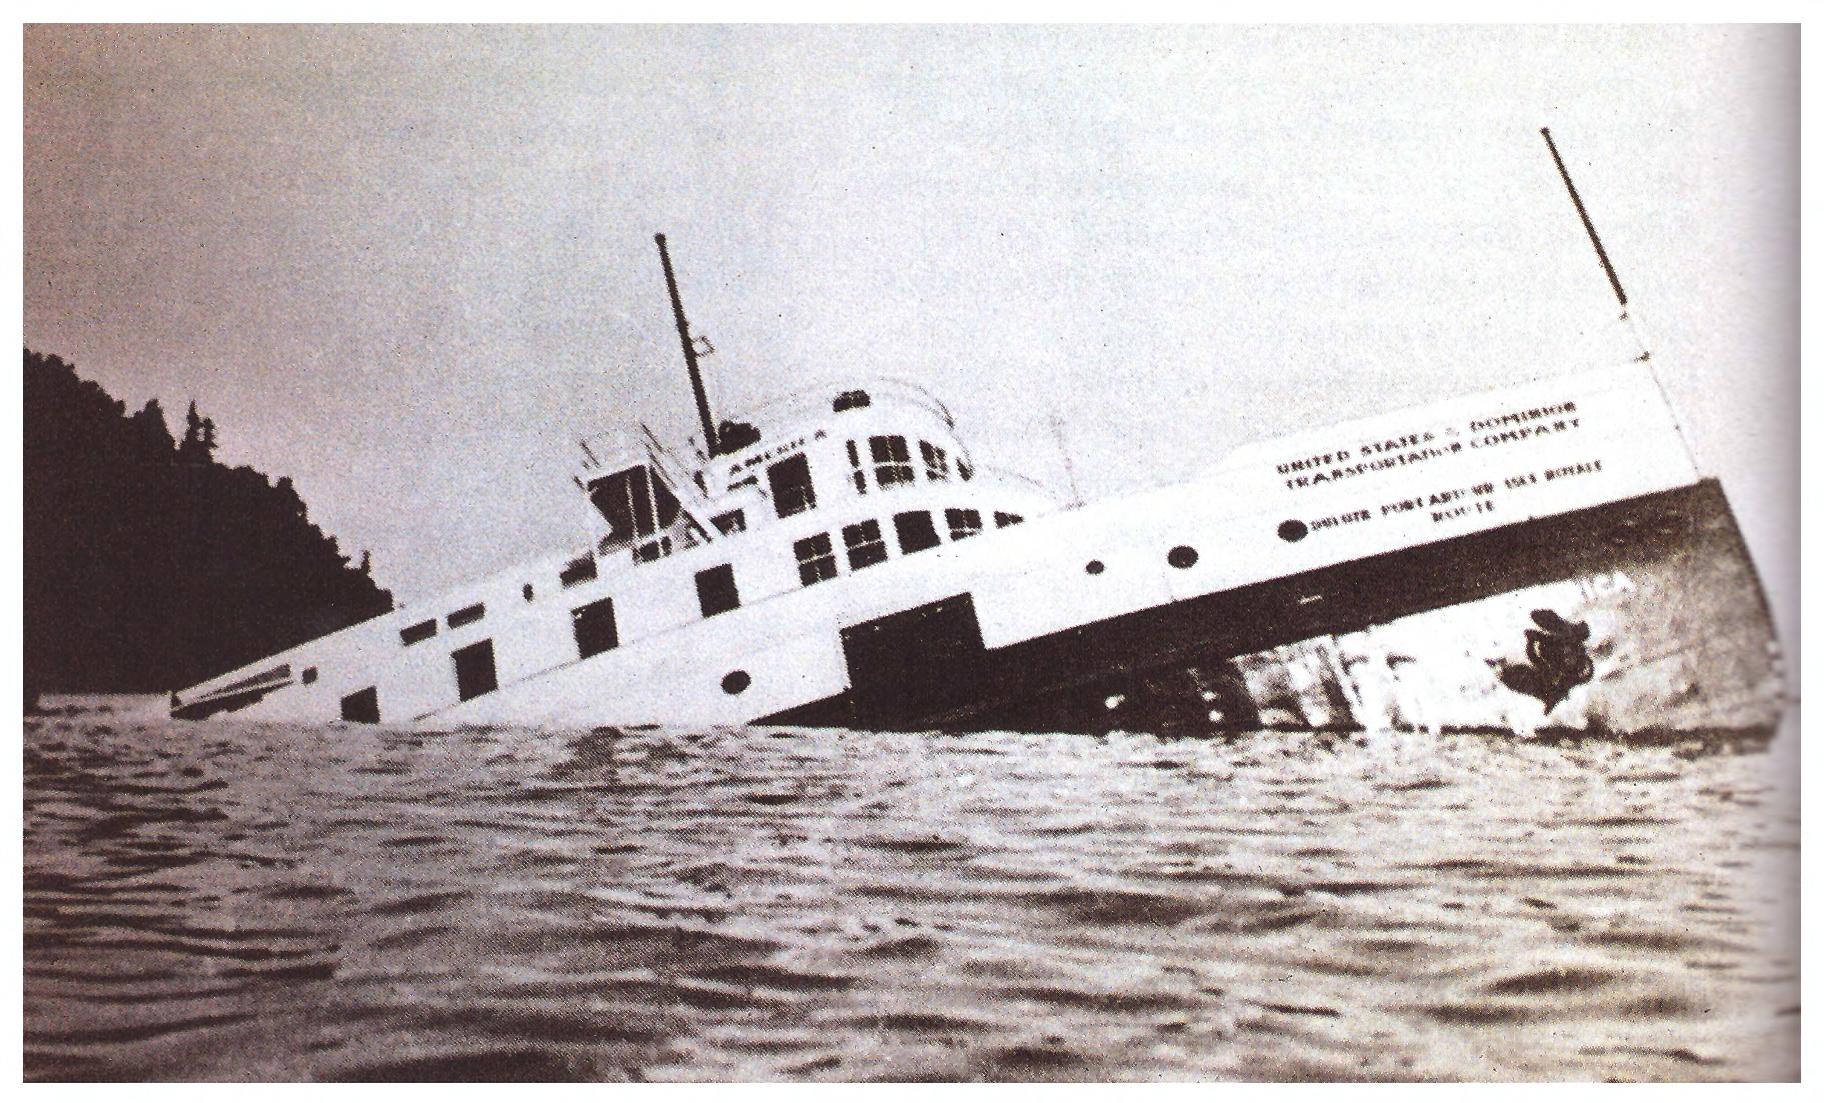 America aground - from Shipwrecks of Lake SuperiorbyMarshall